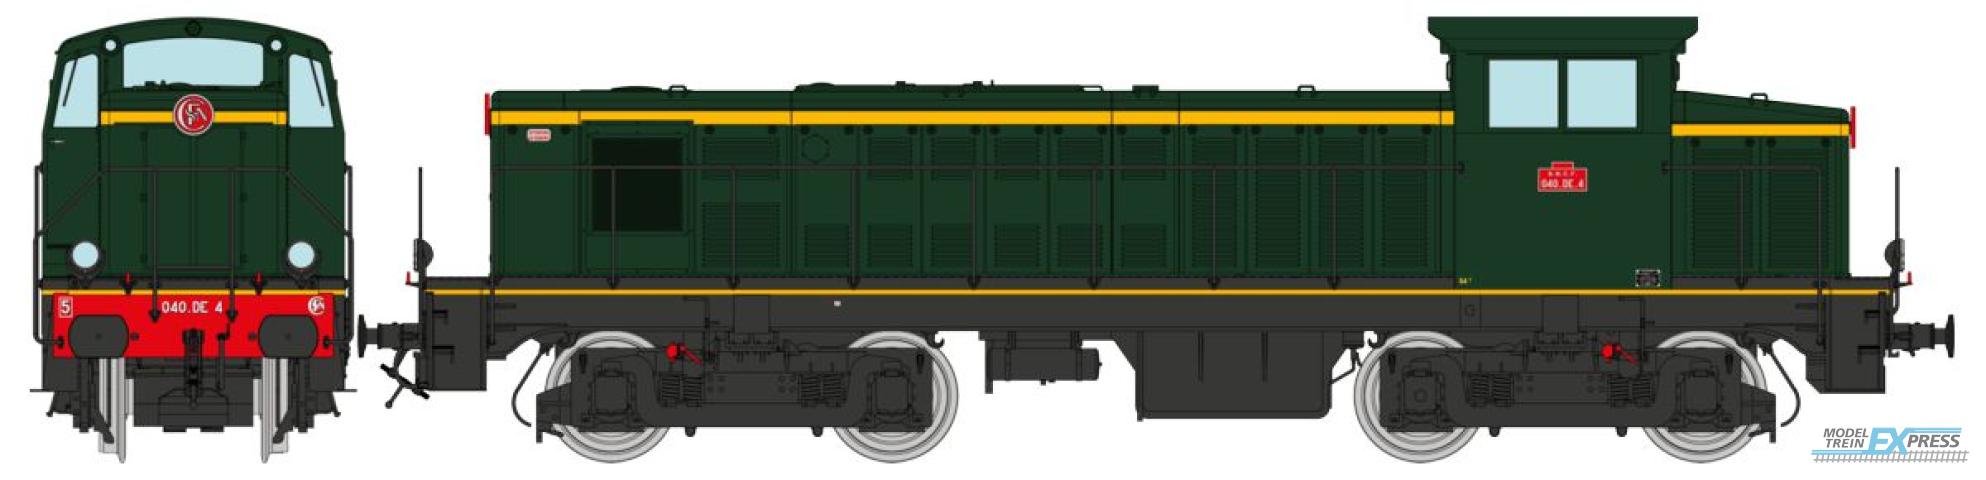 REE models JM-012SAC Diesel Locomotive 040 DE 04 origin, South East, Era III - AC SOUND 3 Rails AC